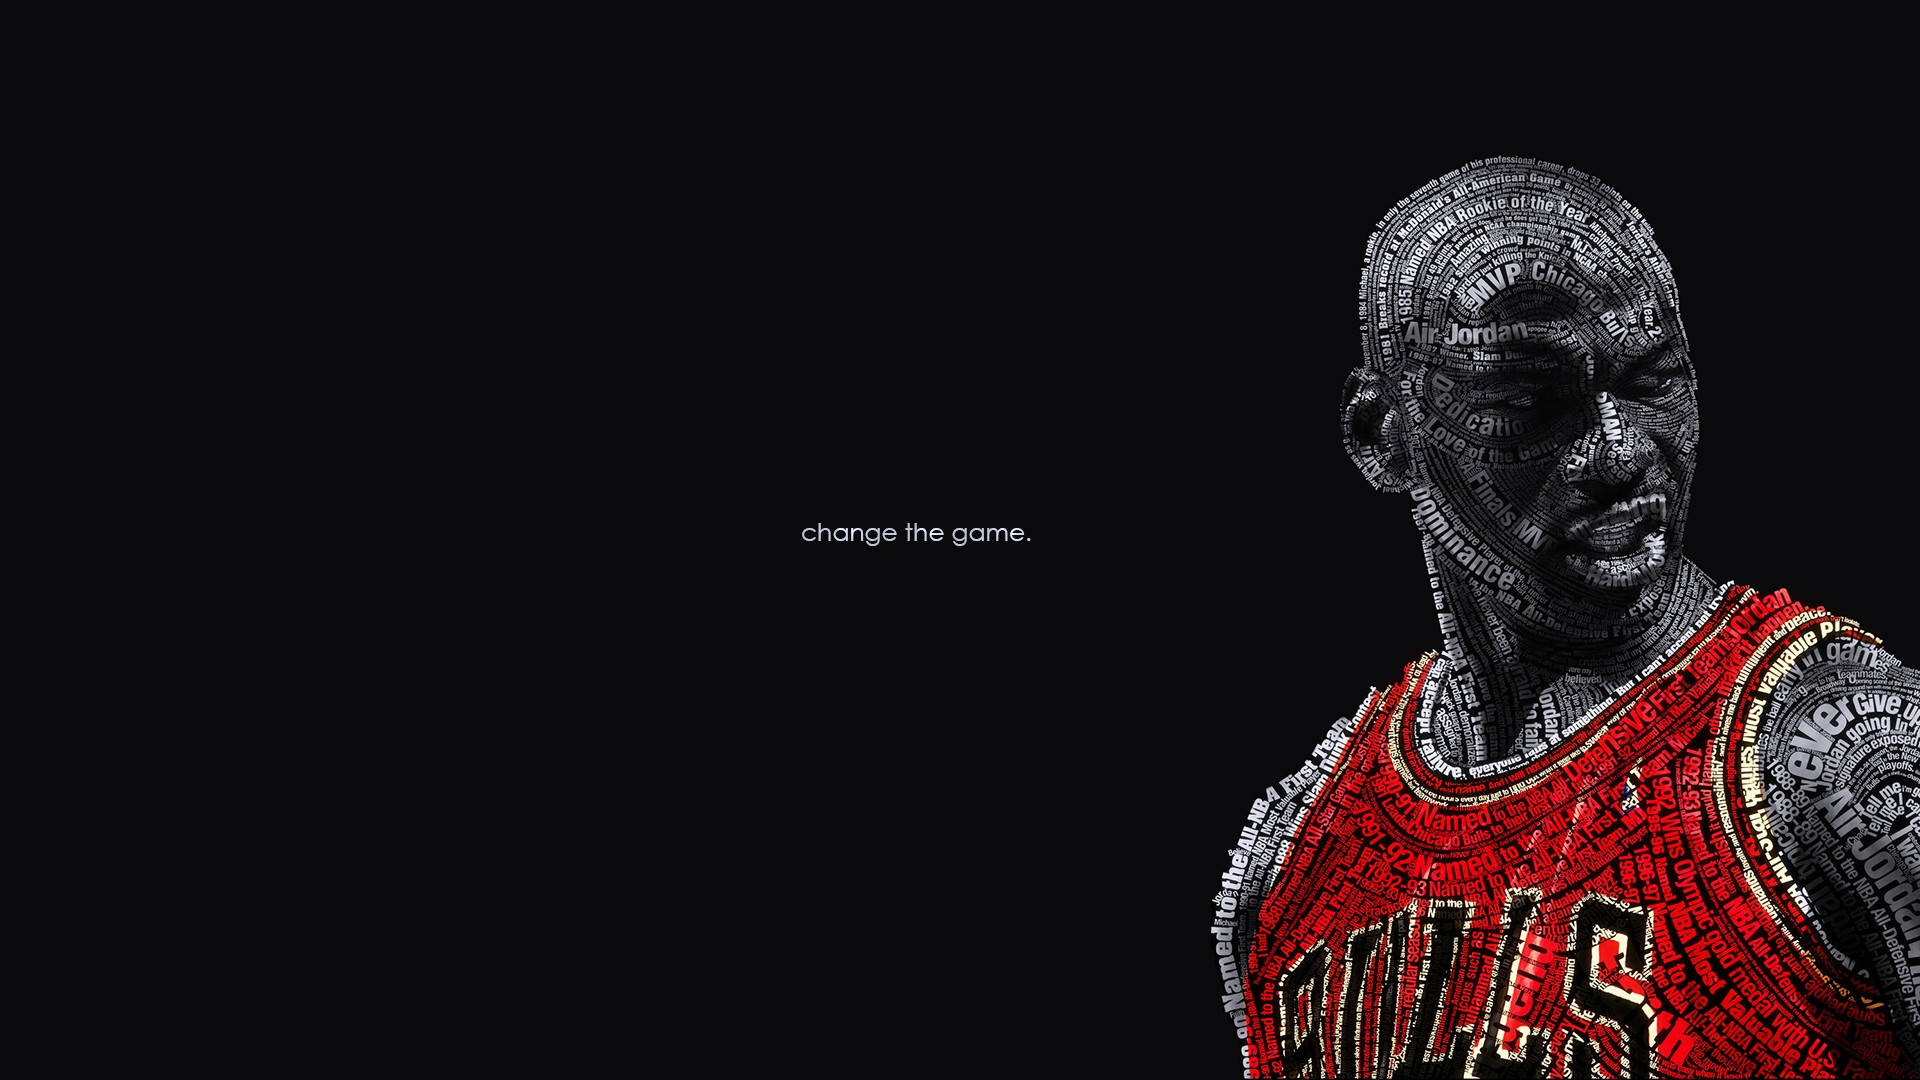 Michael Jordan Change The Game